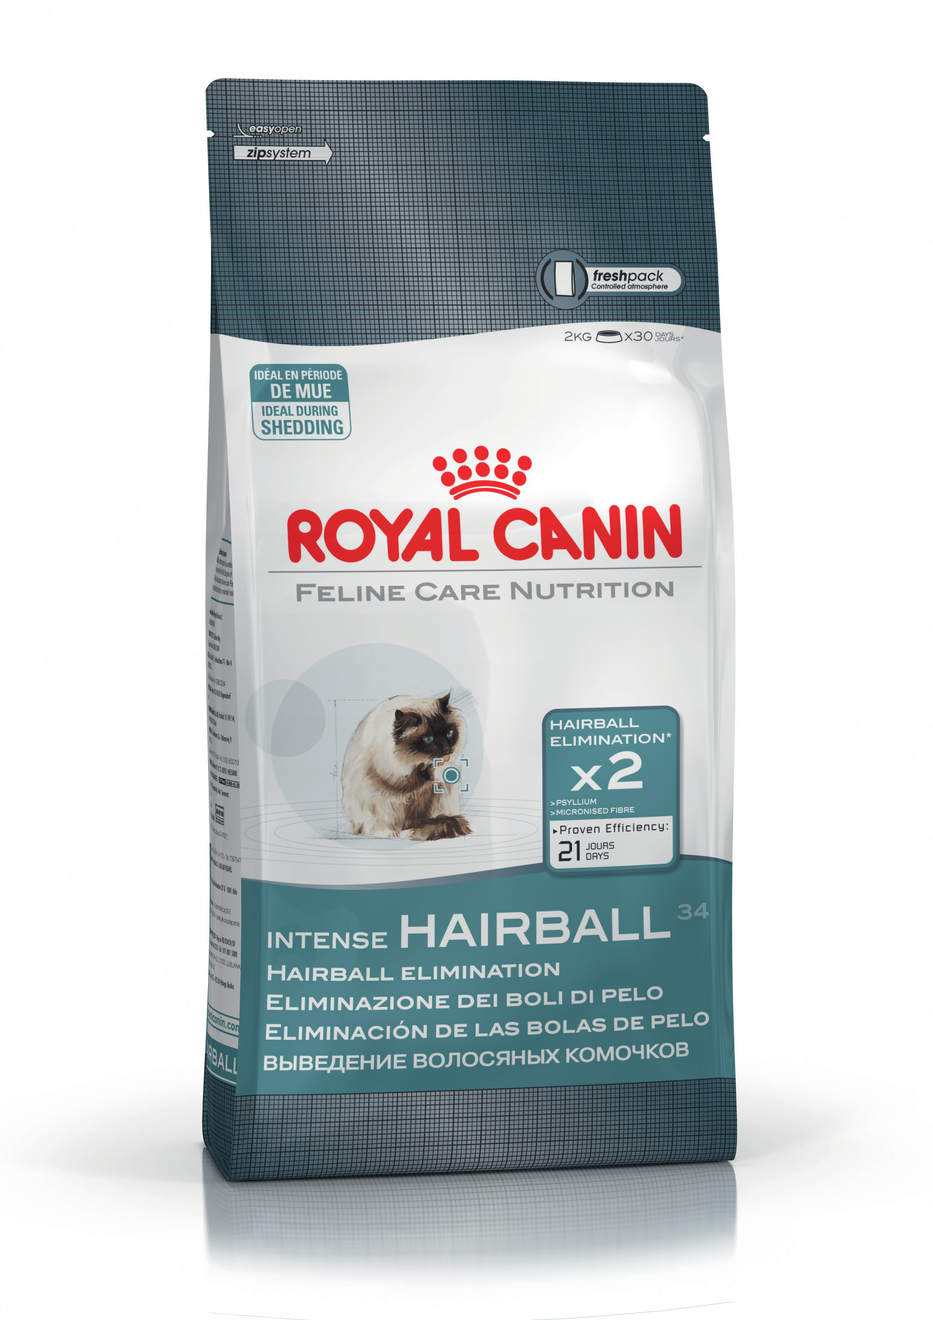 Intense Hairball 34 Dry - Royal Canin